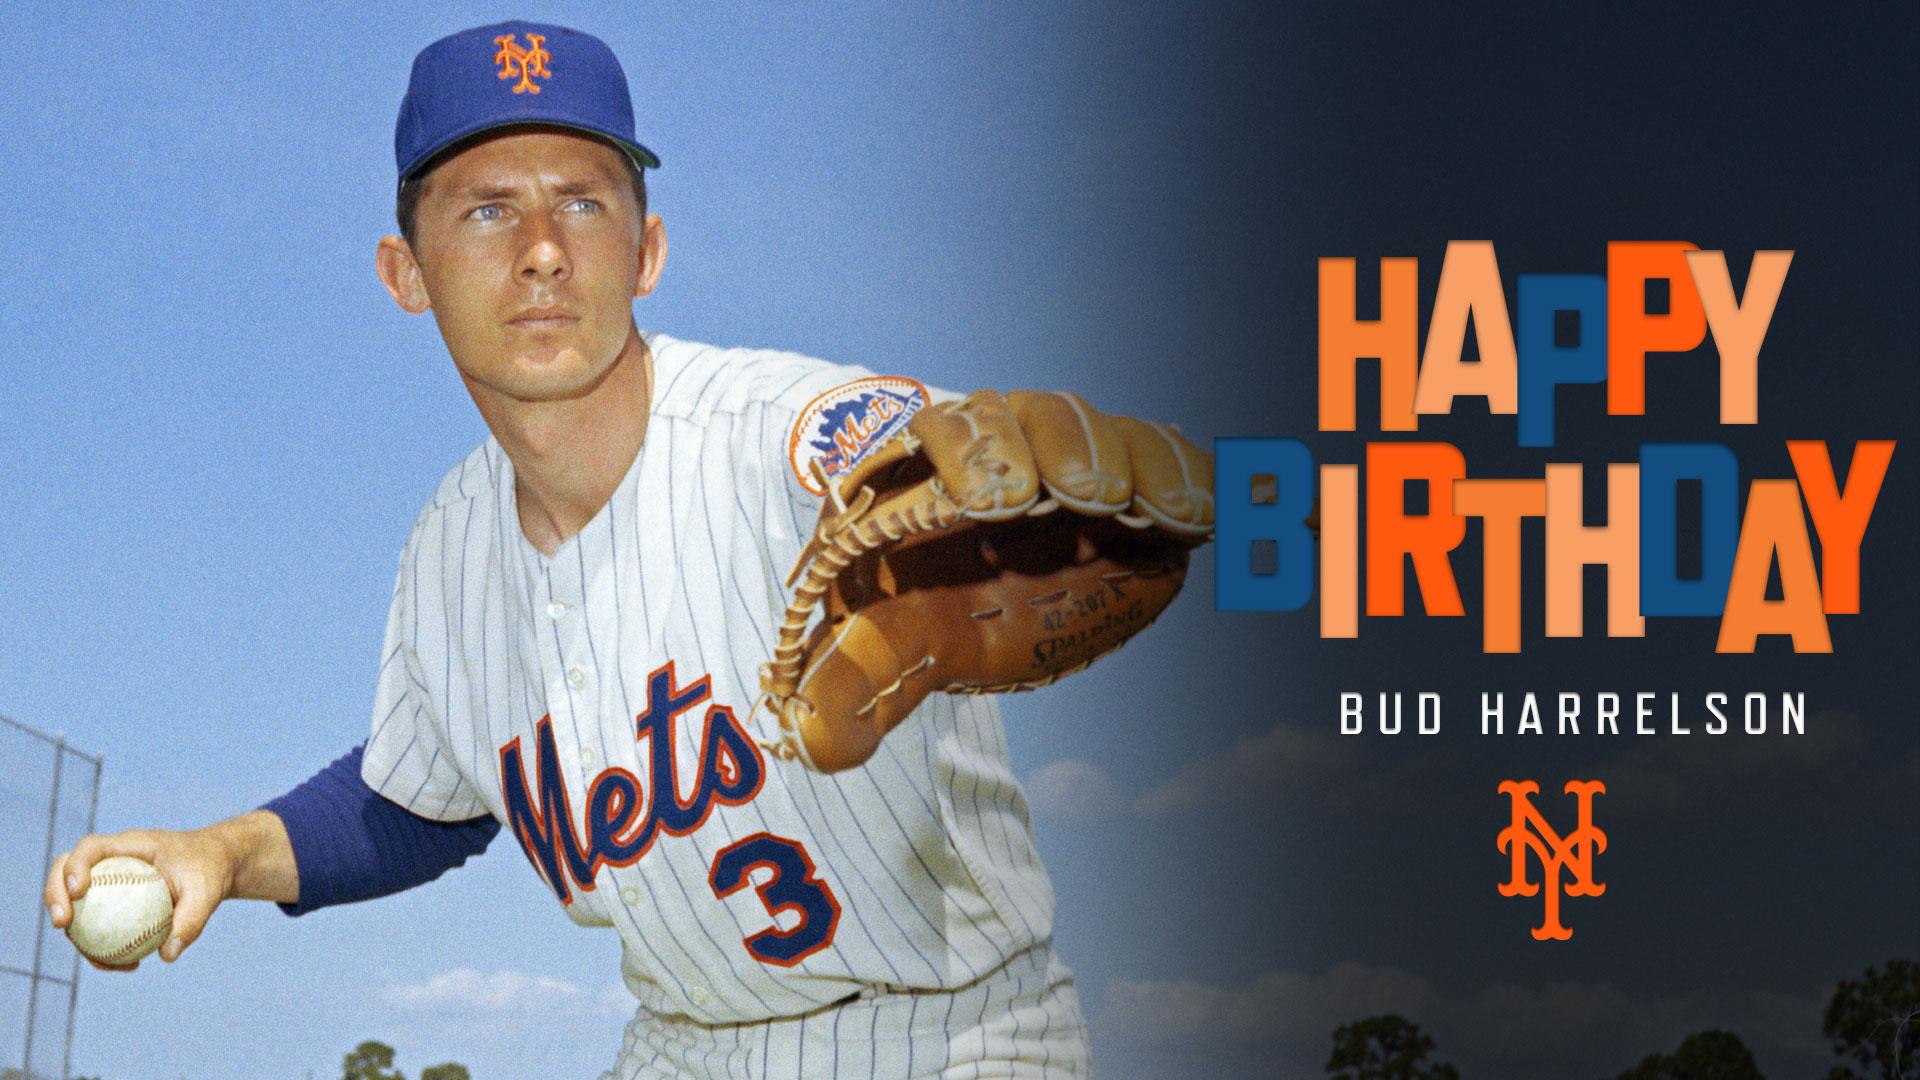 Very happy birthday to Hall of Famer, Bud Harrelson!  